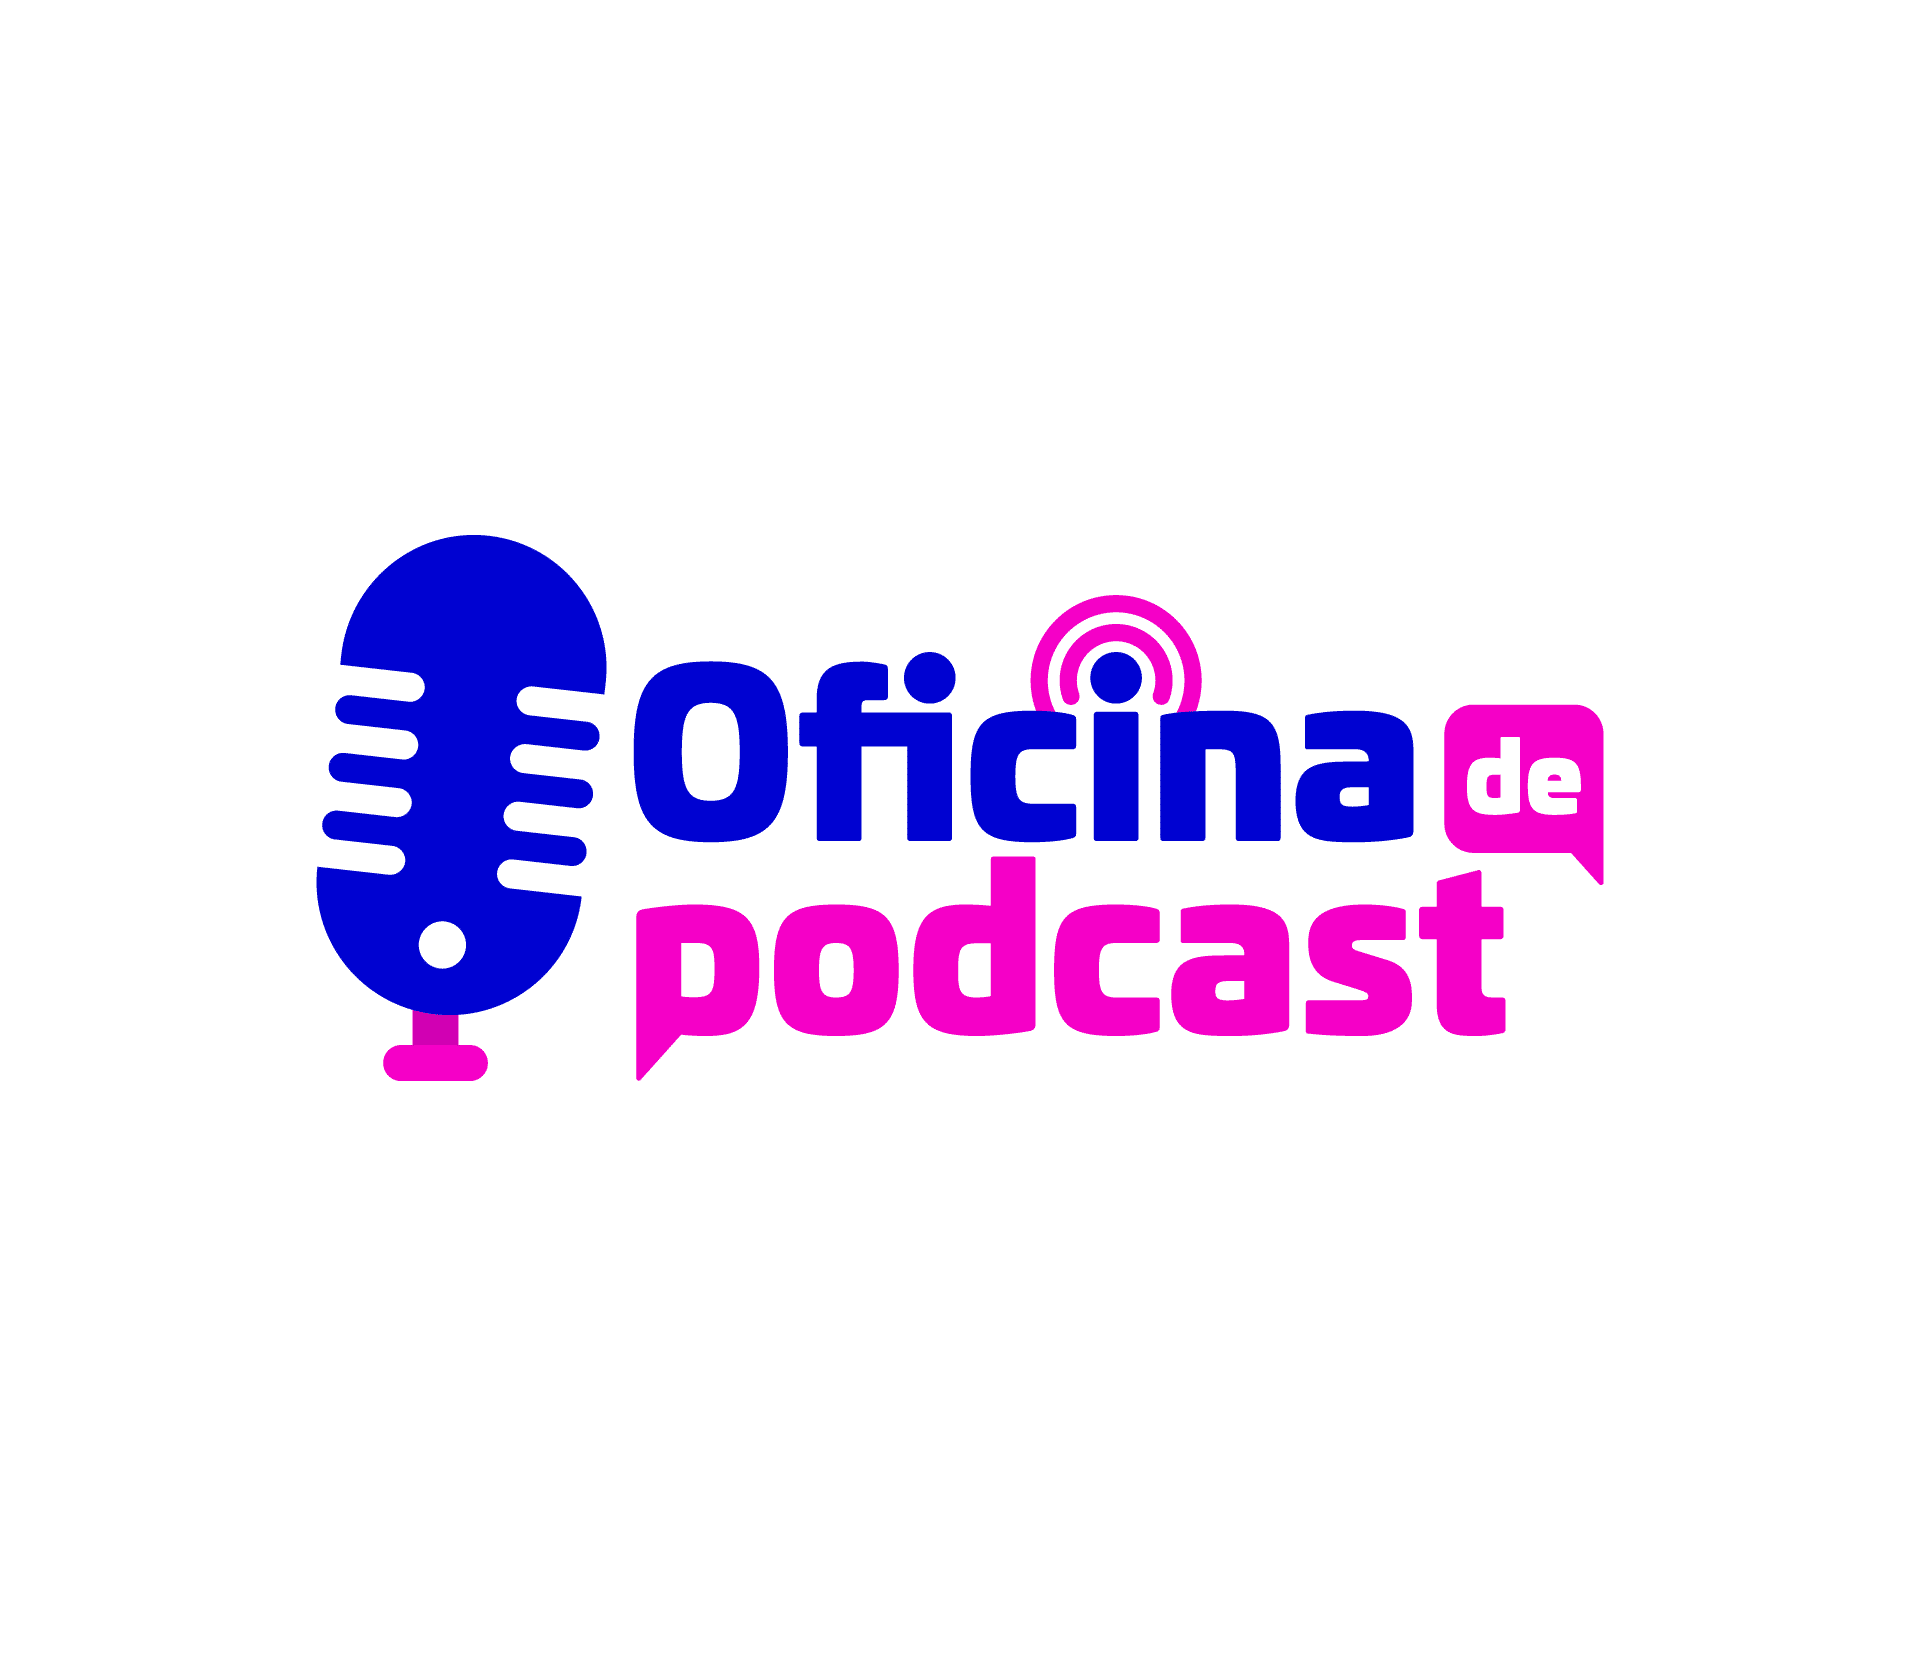 Oficina de Podcast Fundo Branco2